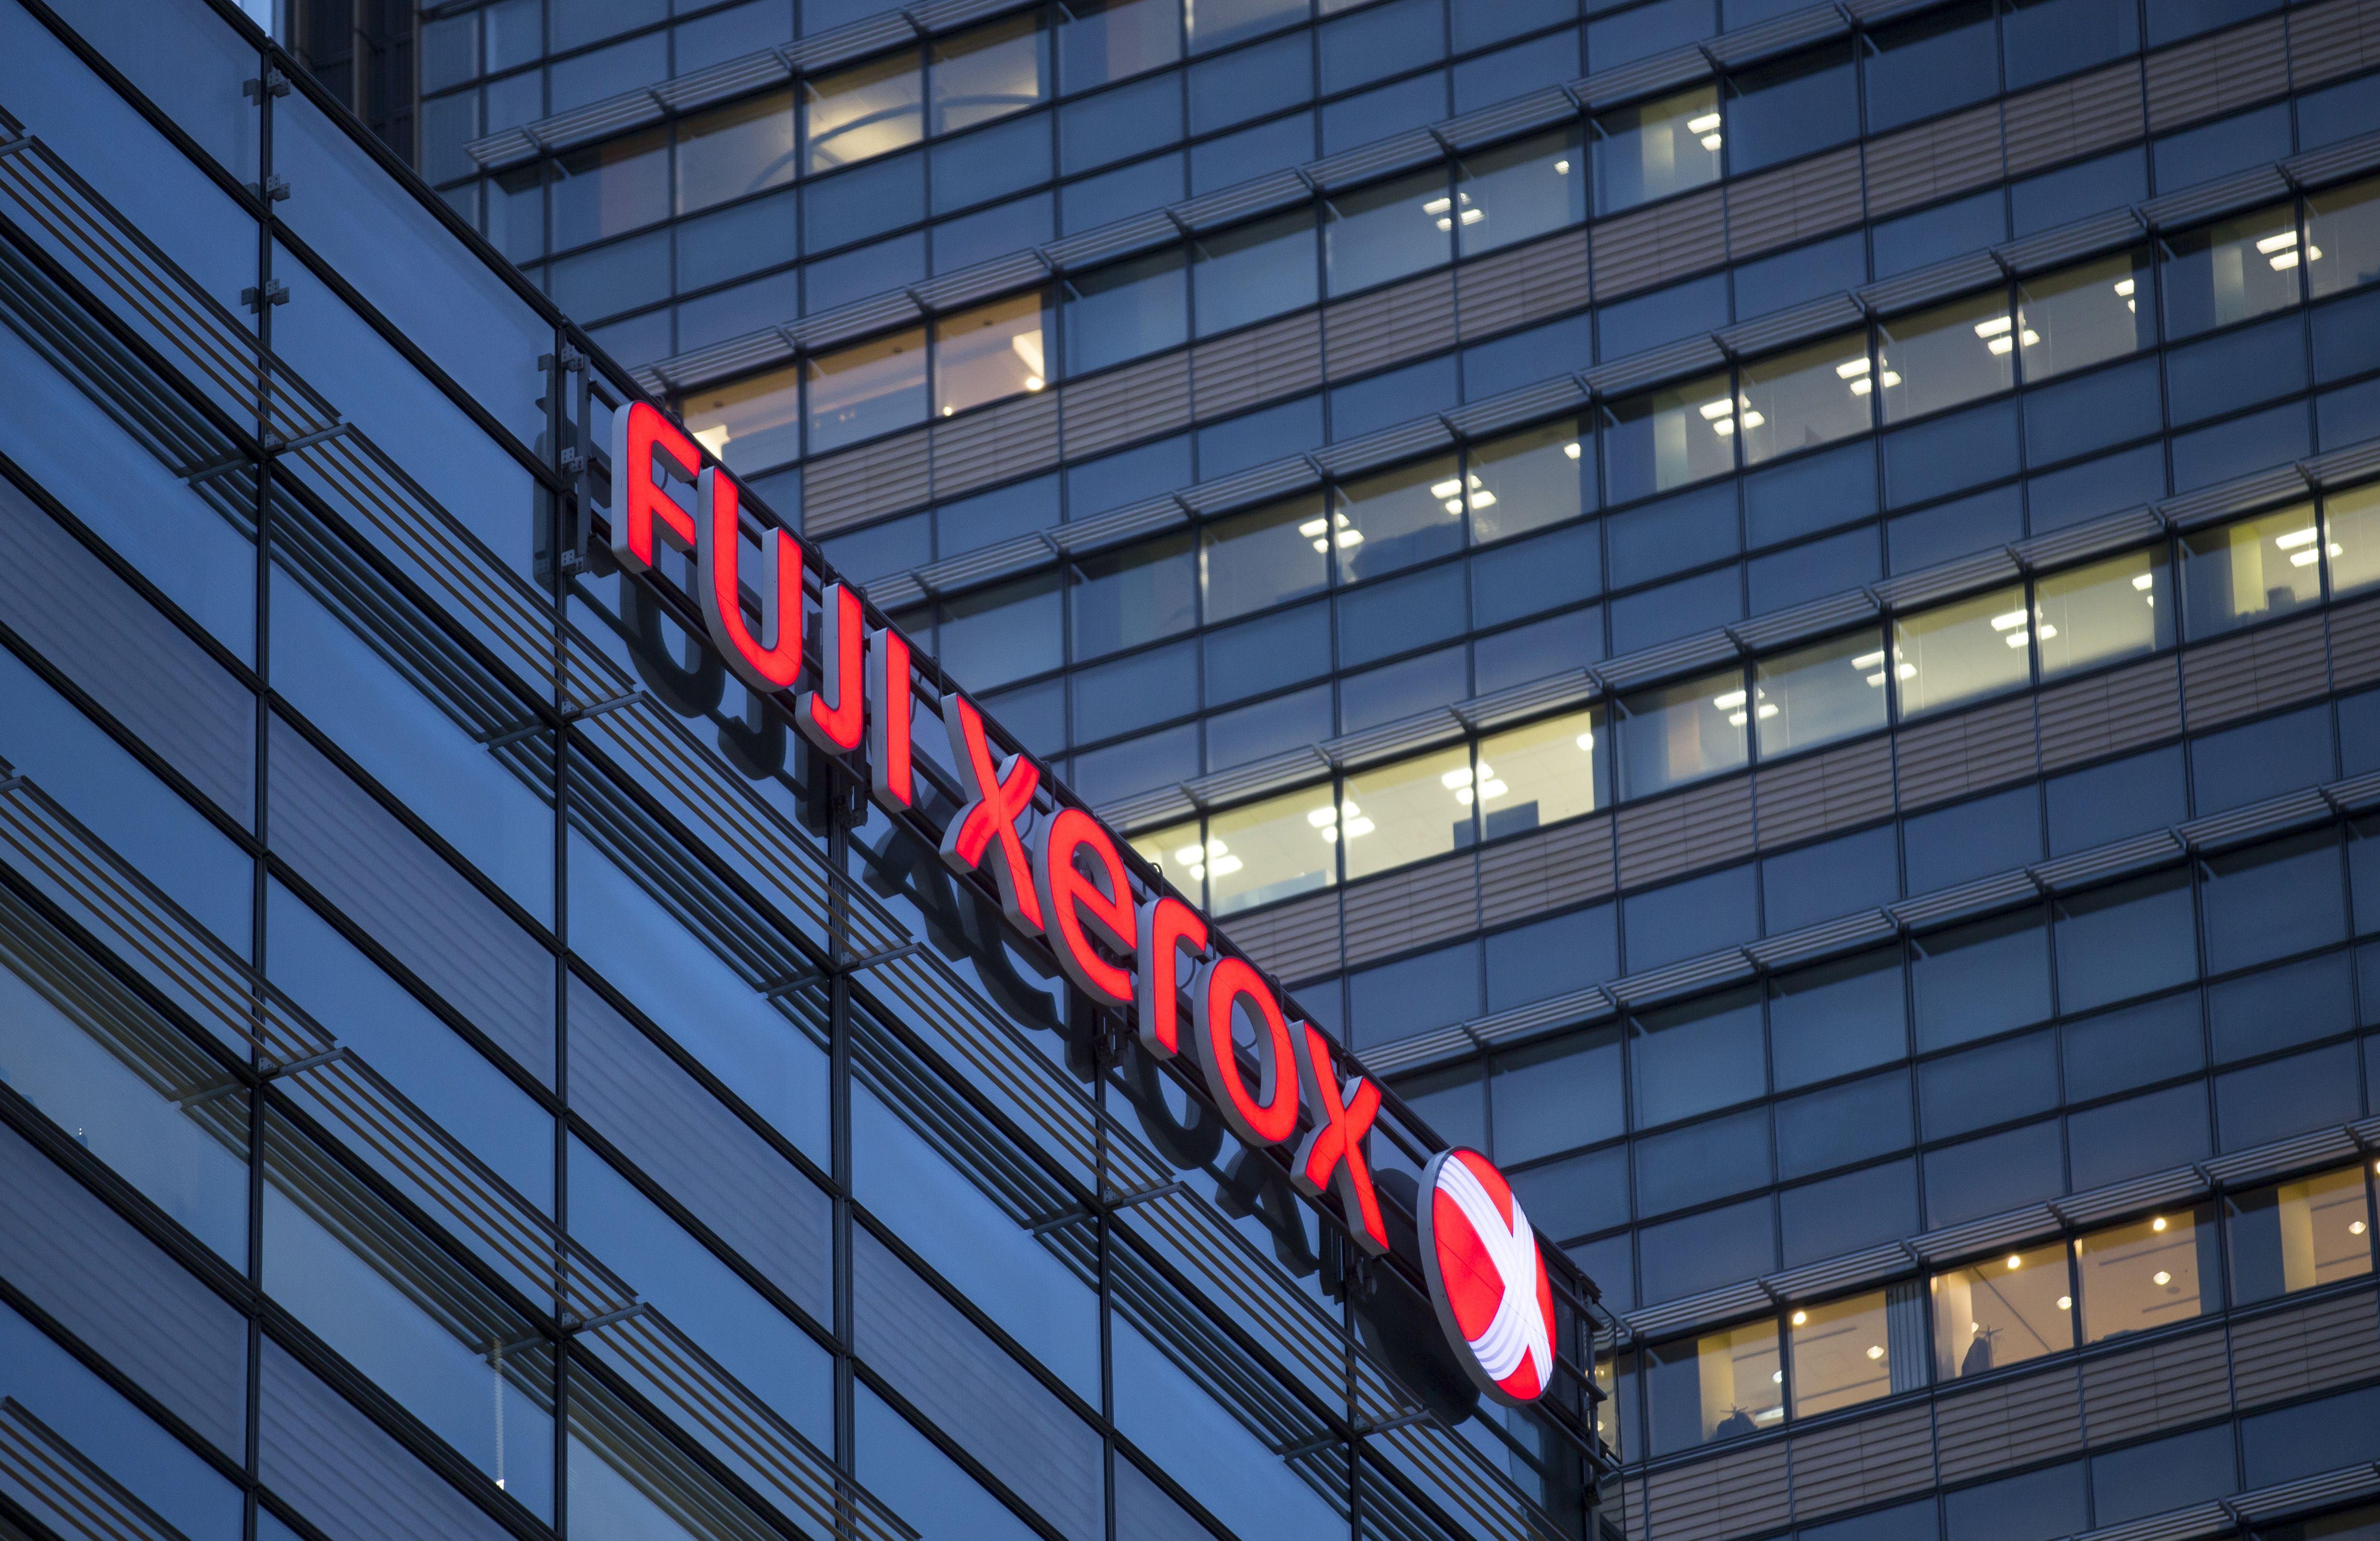 Fuji Xerox Logo - Fujifilm acquires Xerox for $6.1 billion